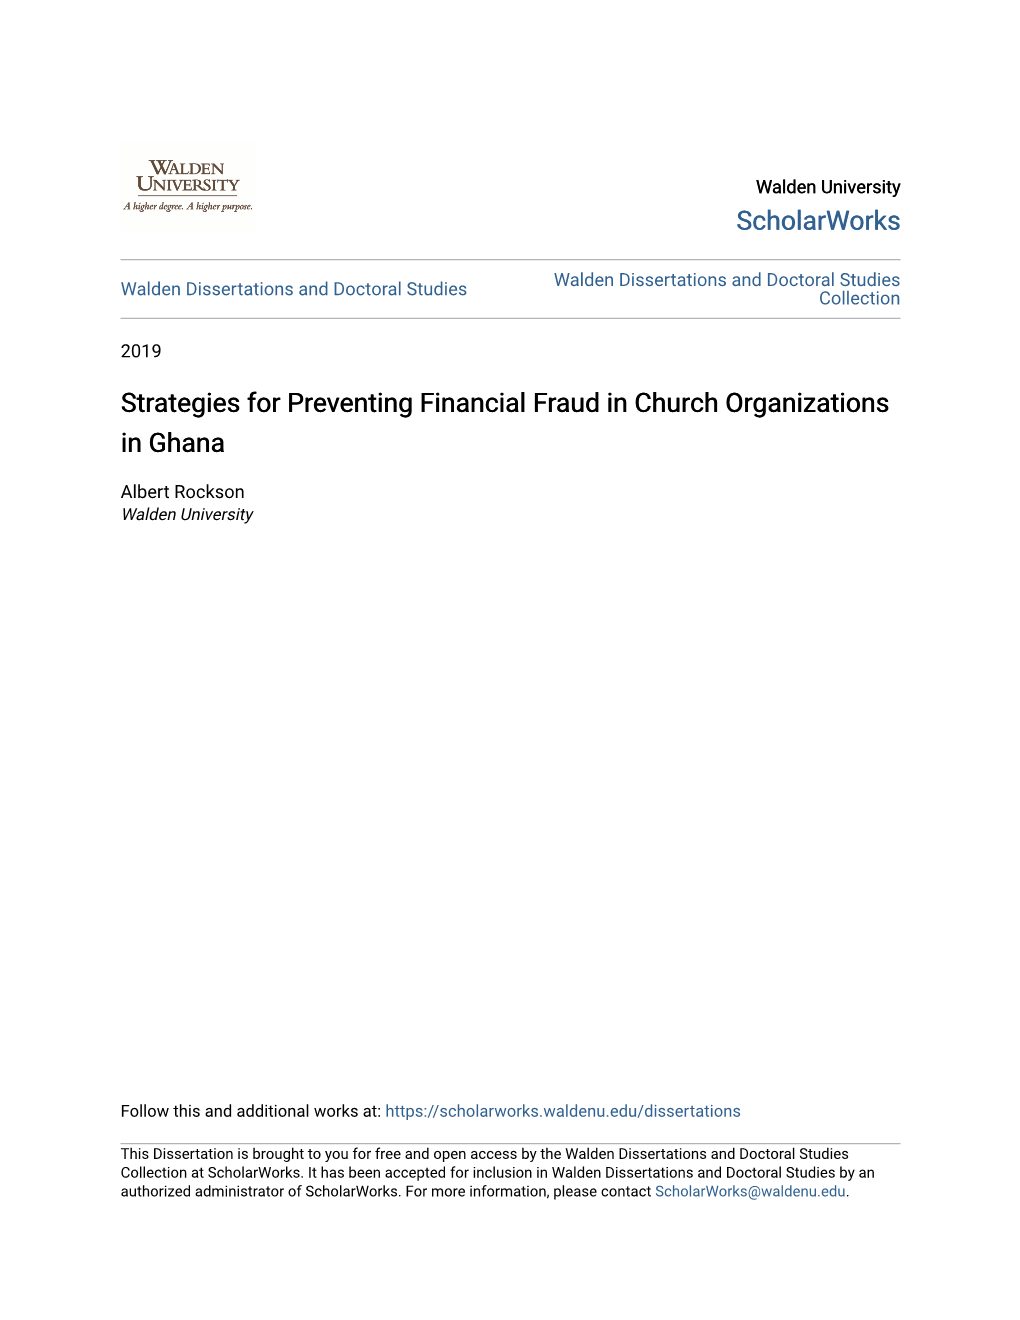 Strategies for Preventing Financial Fraud in Church Organizations in Ghana